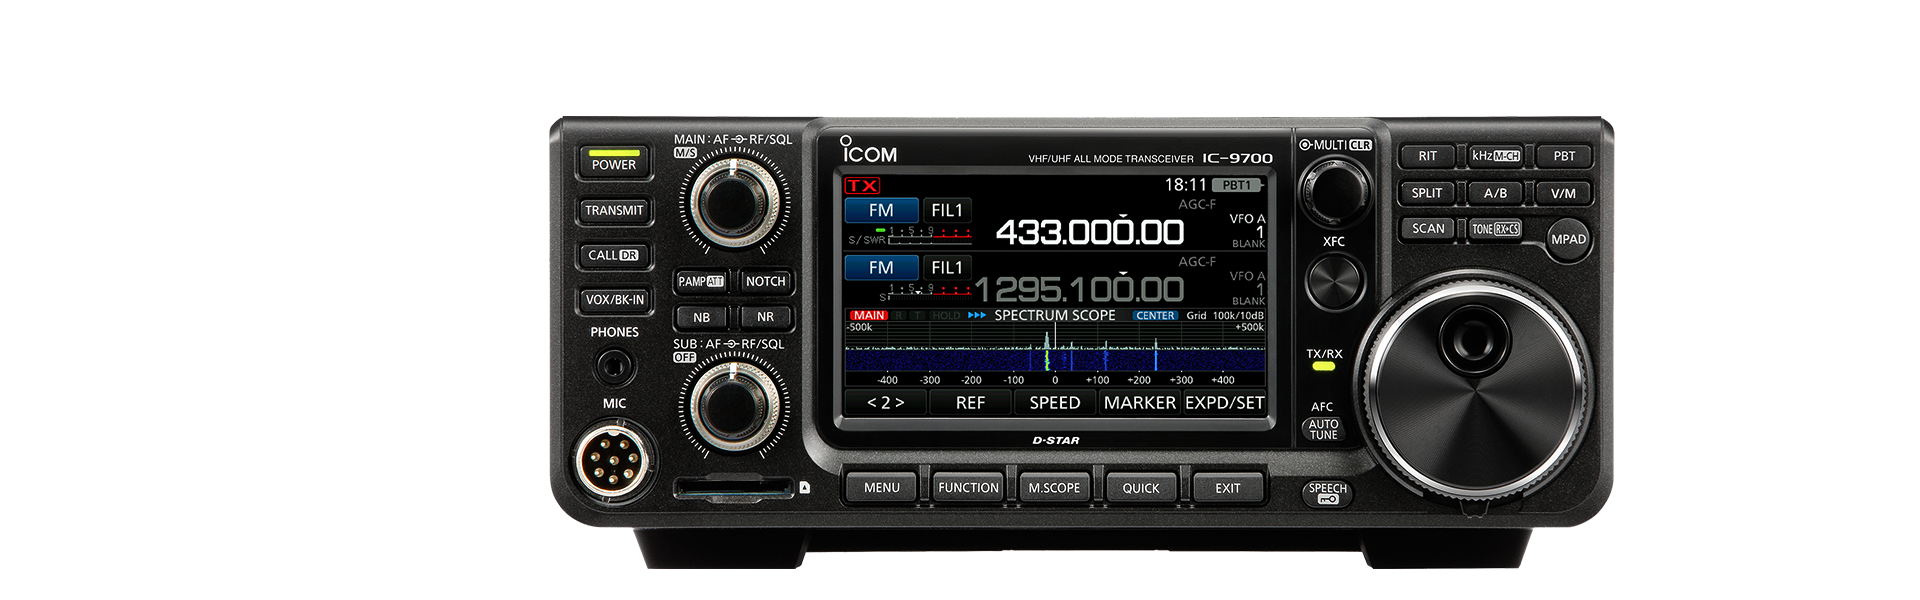 Icom IC-9700 VHF UHF All Mode Transceiver - VK3FS